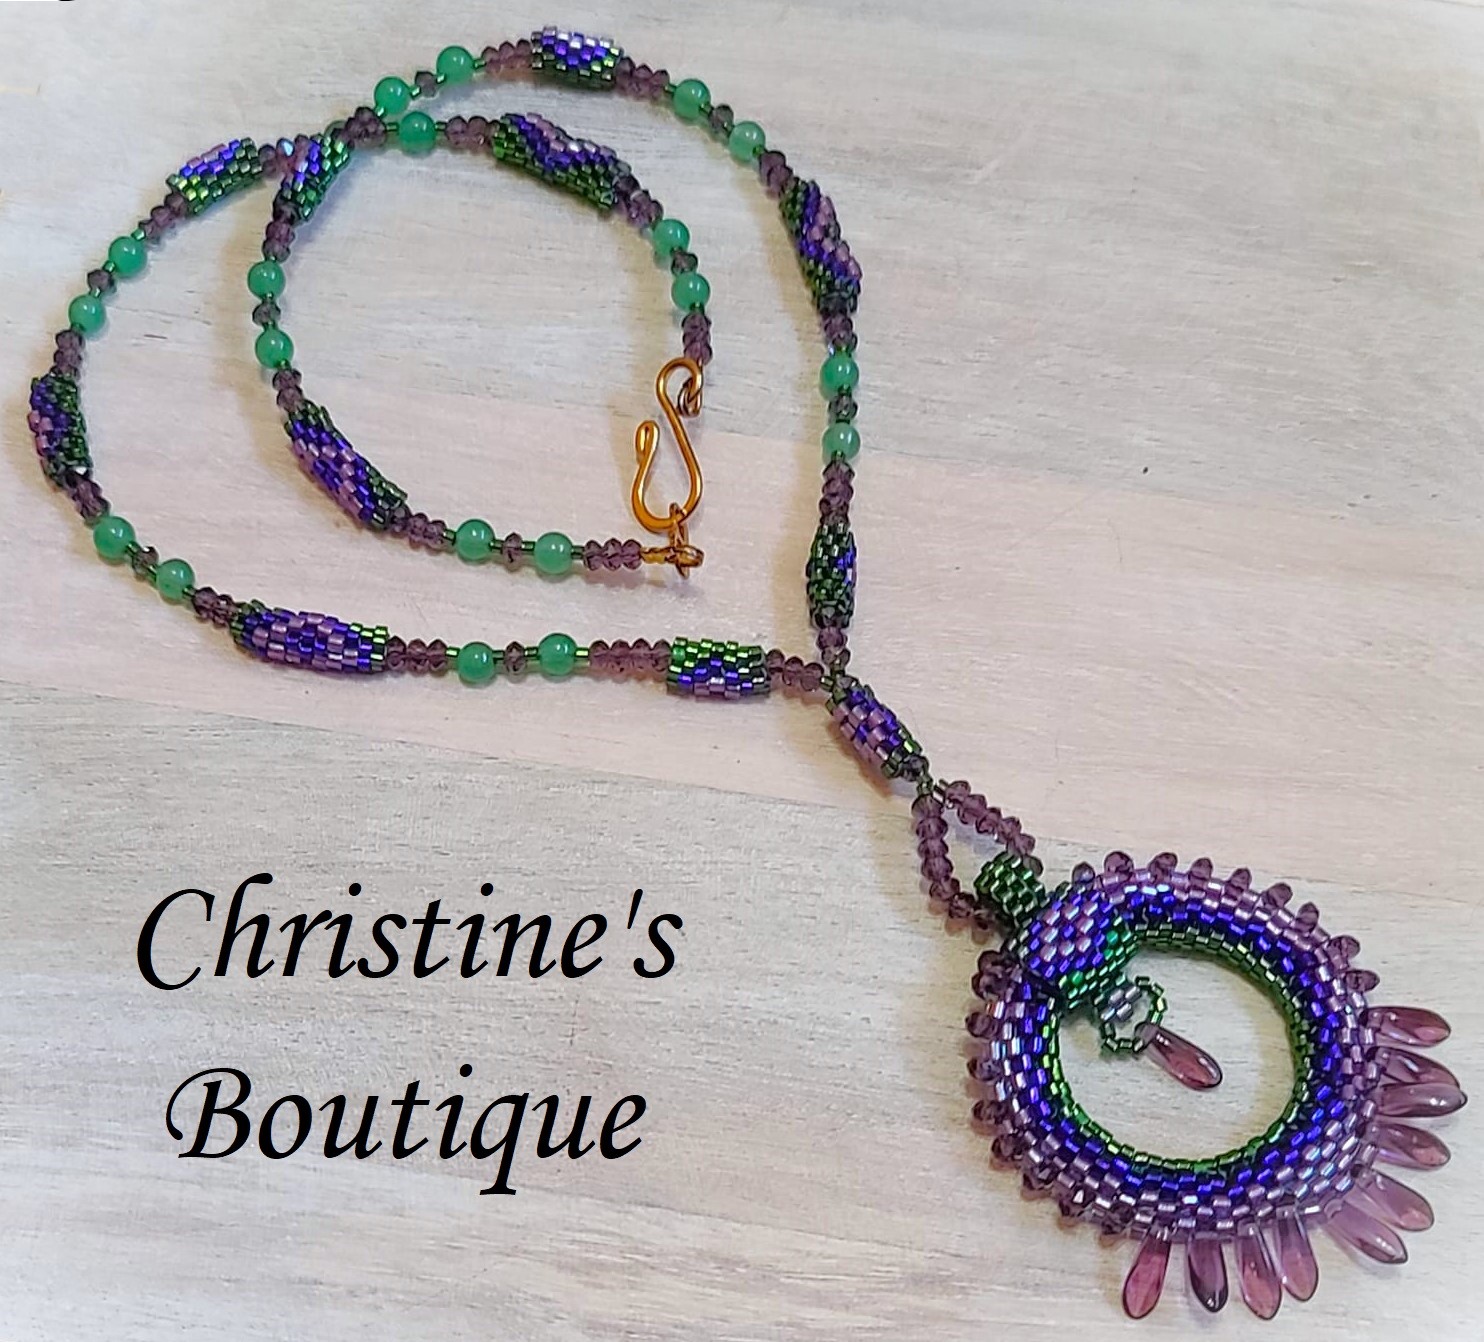 Beaded pendant necklace with fringe, circle pendant, jade gems - Click Image to Close